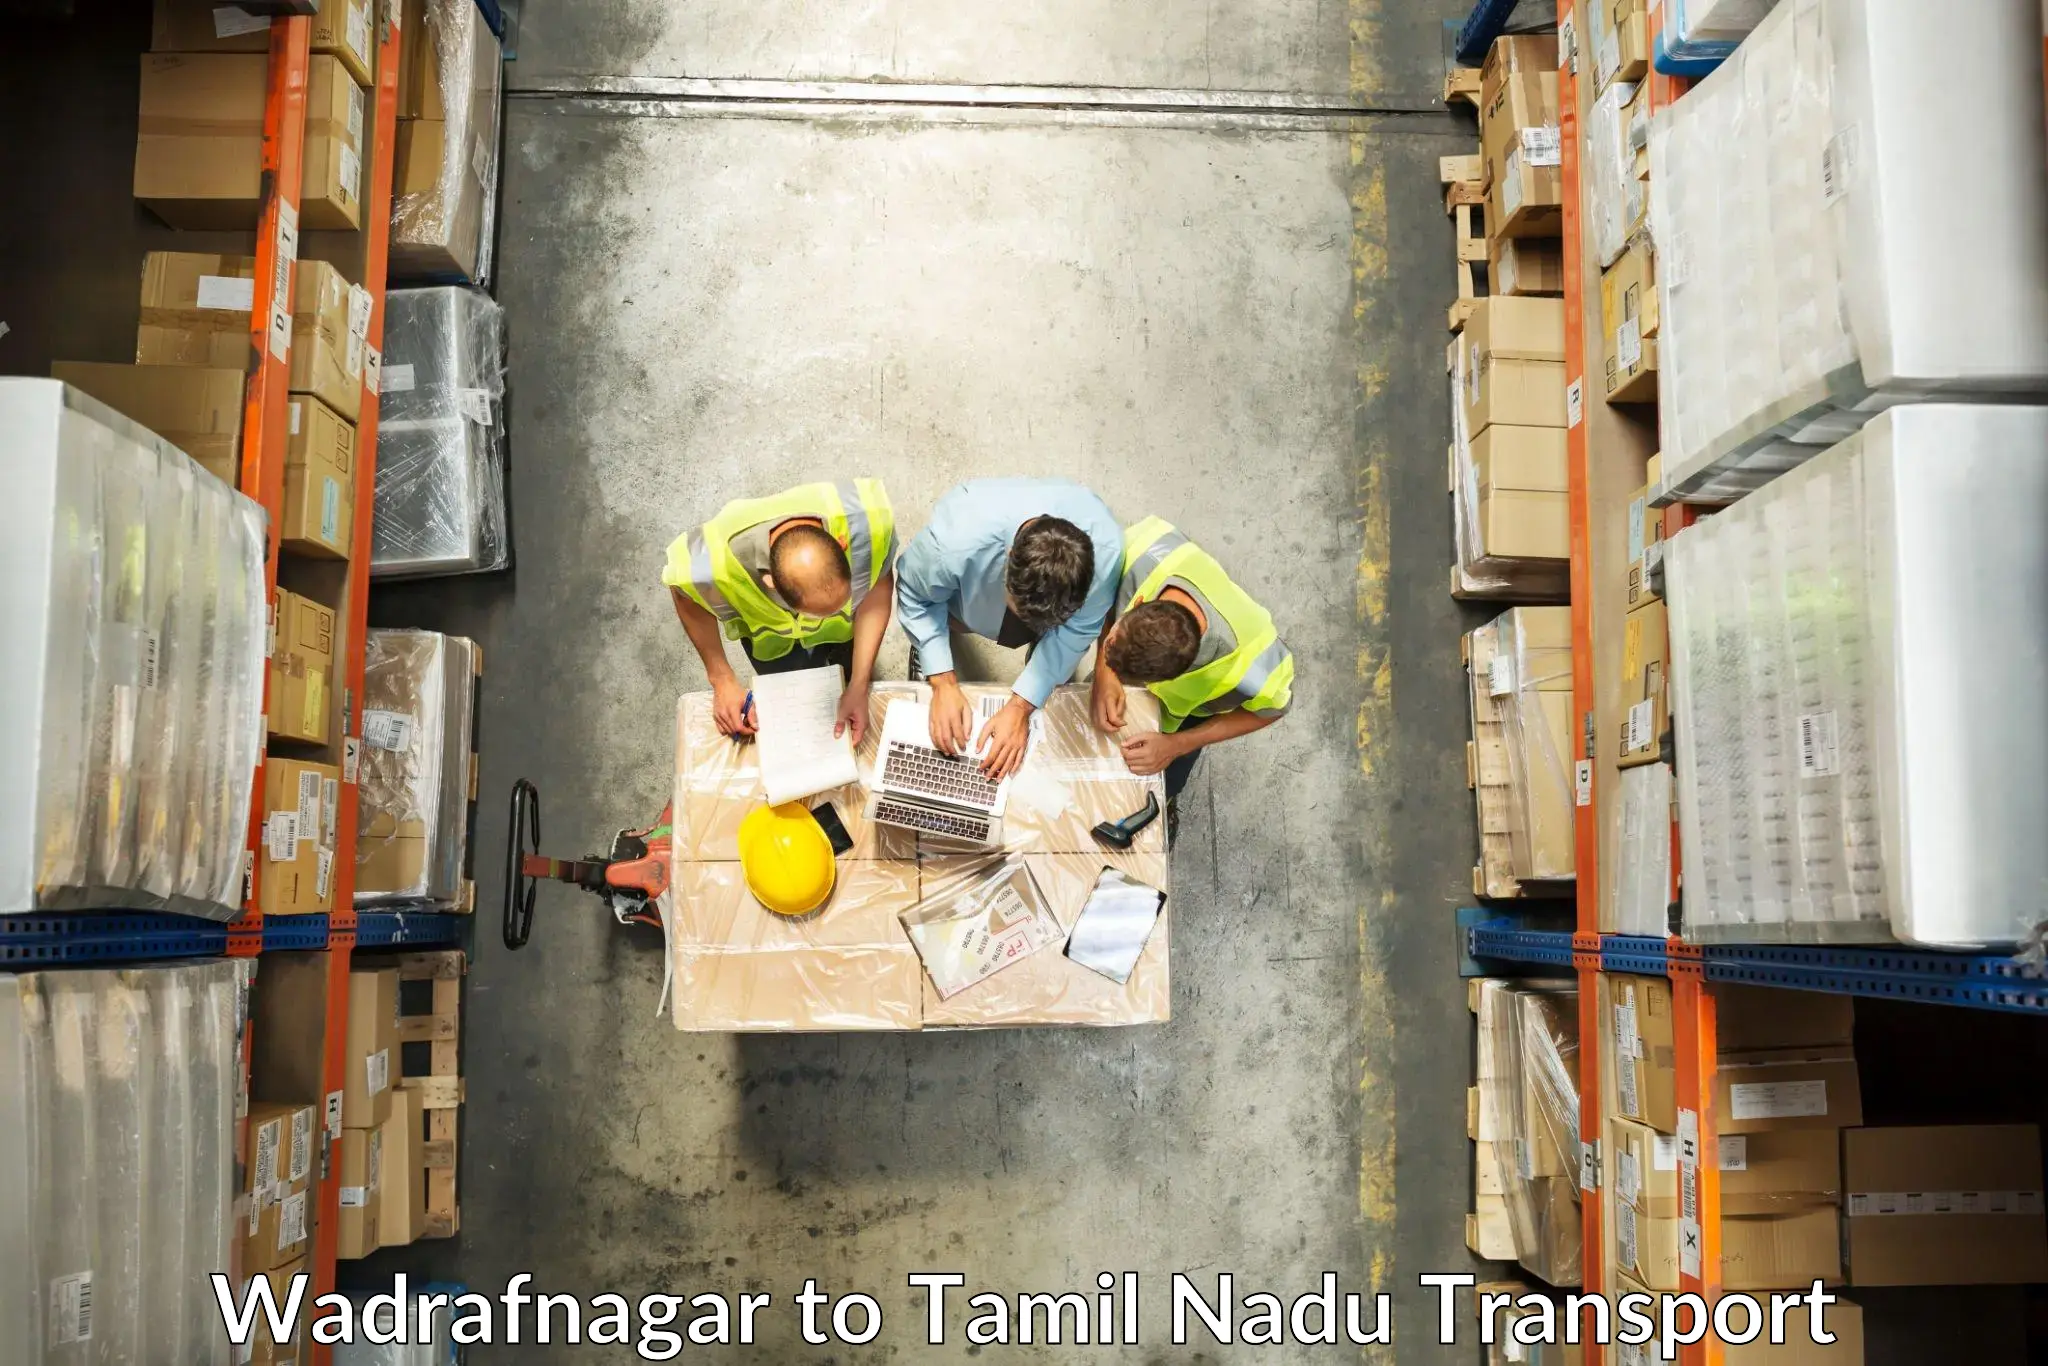 Lorry transport service Wadrafnagar to Chennai Port